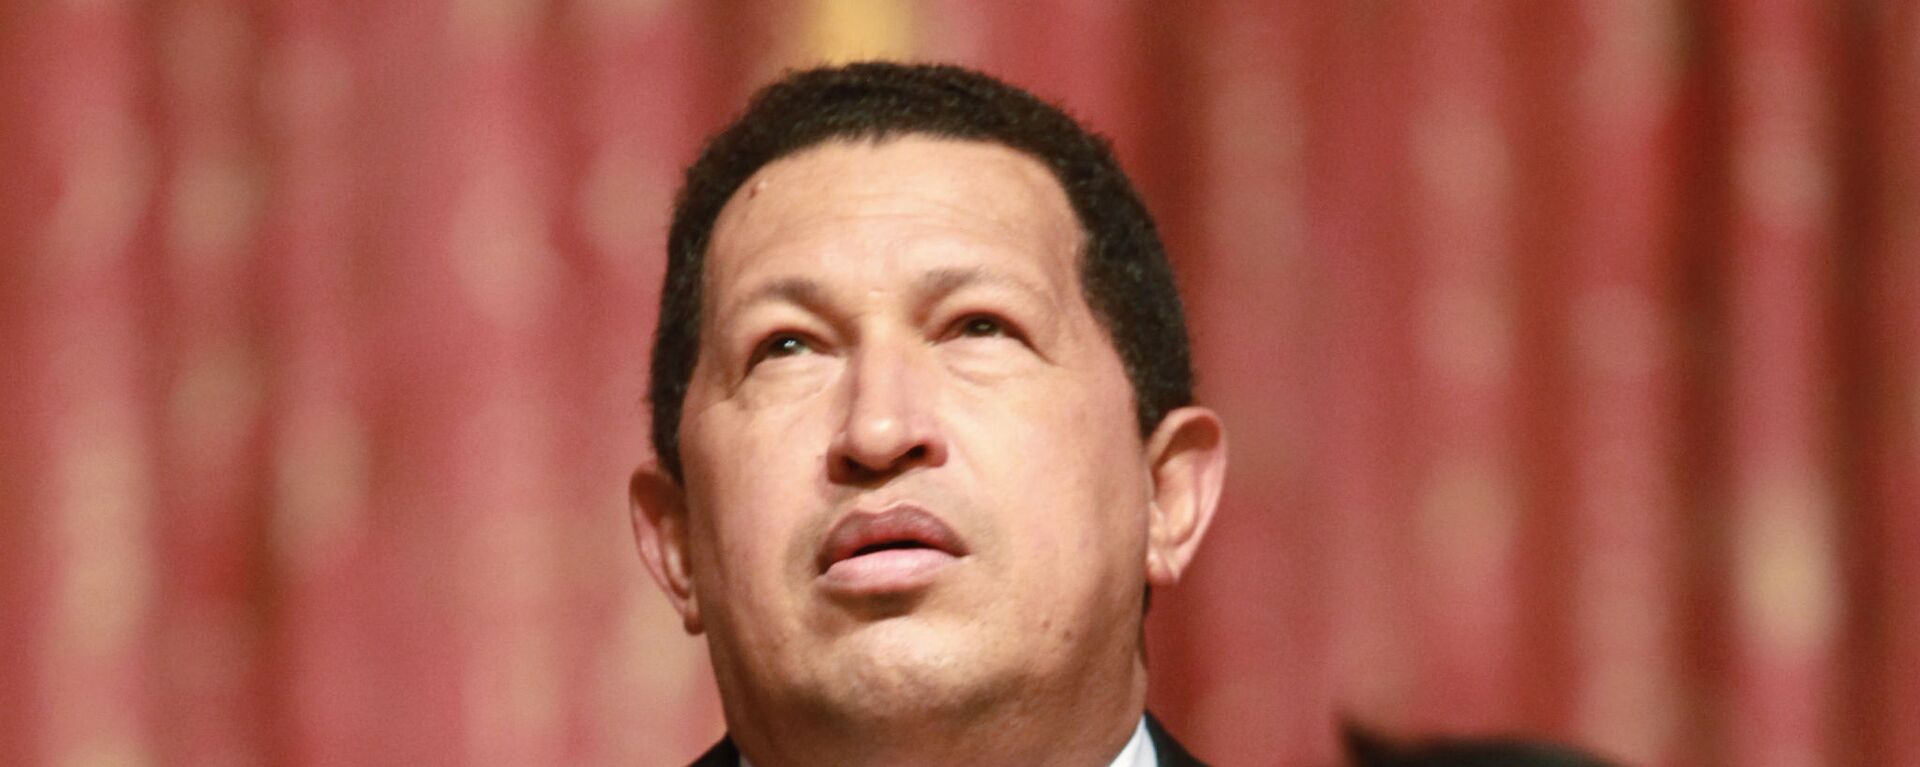 Hugo Chávez, foto de archivo - Sputnik Mundo, 1920, 12.12.2019